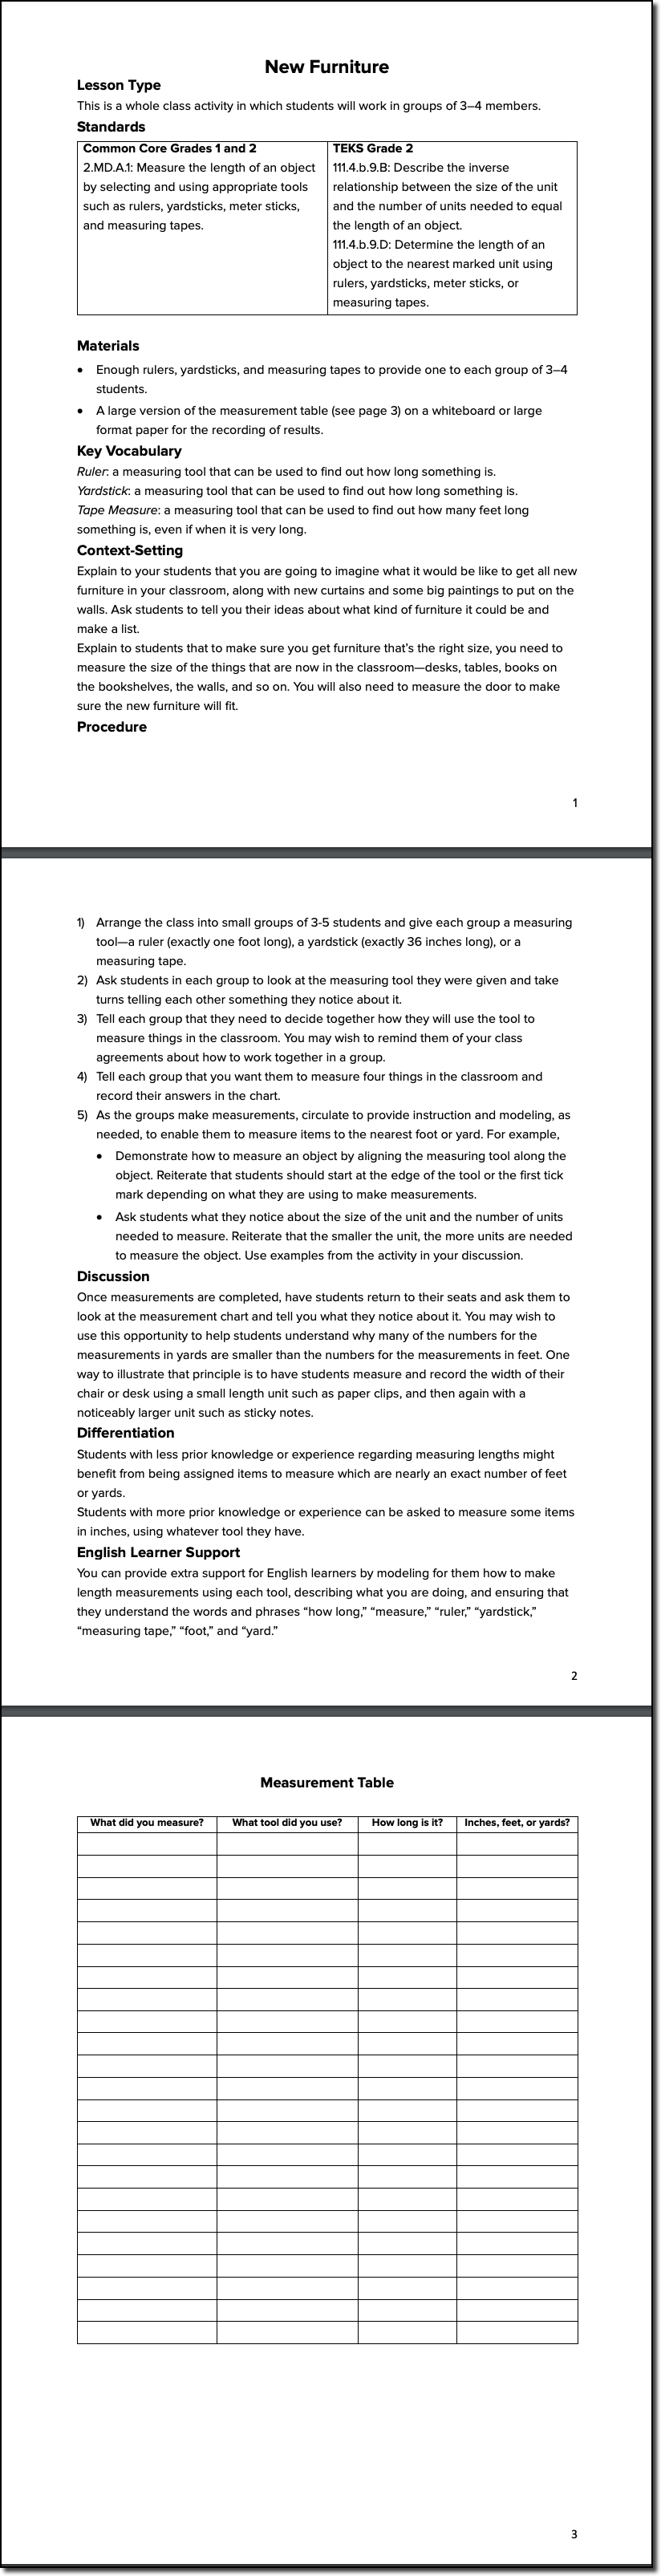 Full-lesson-plan-pdf.png